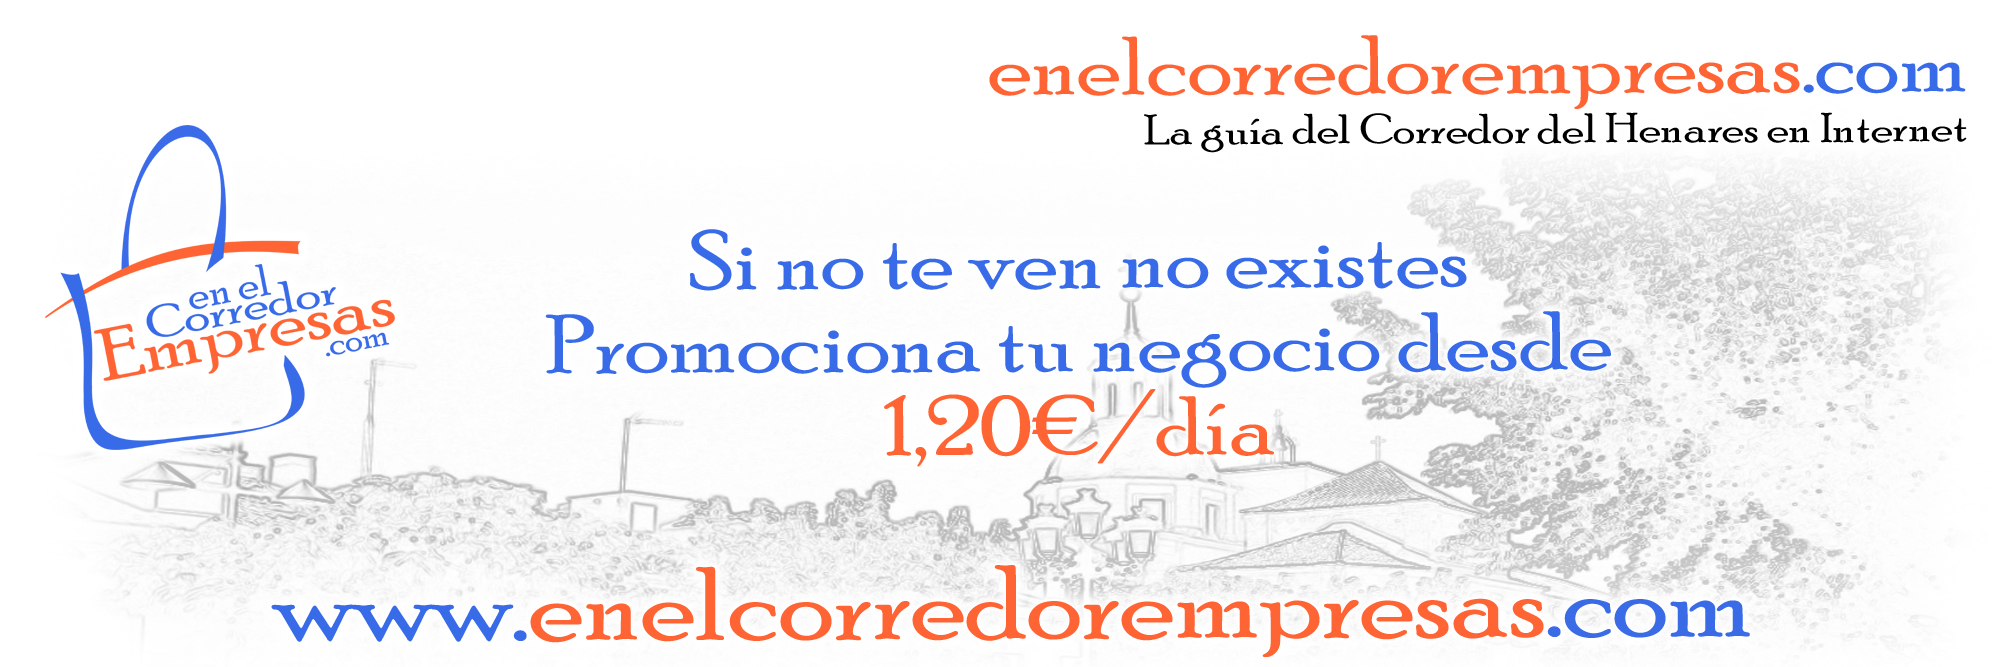 www.enelcorredorempresas.com